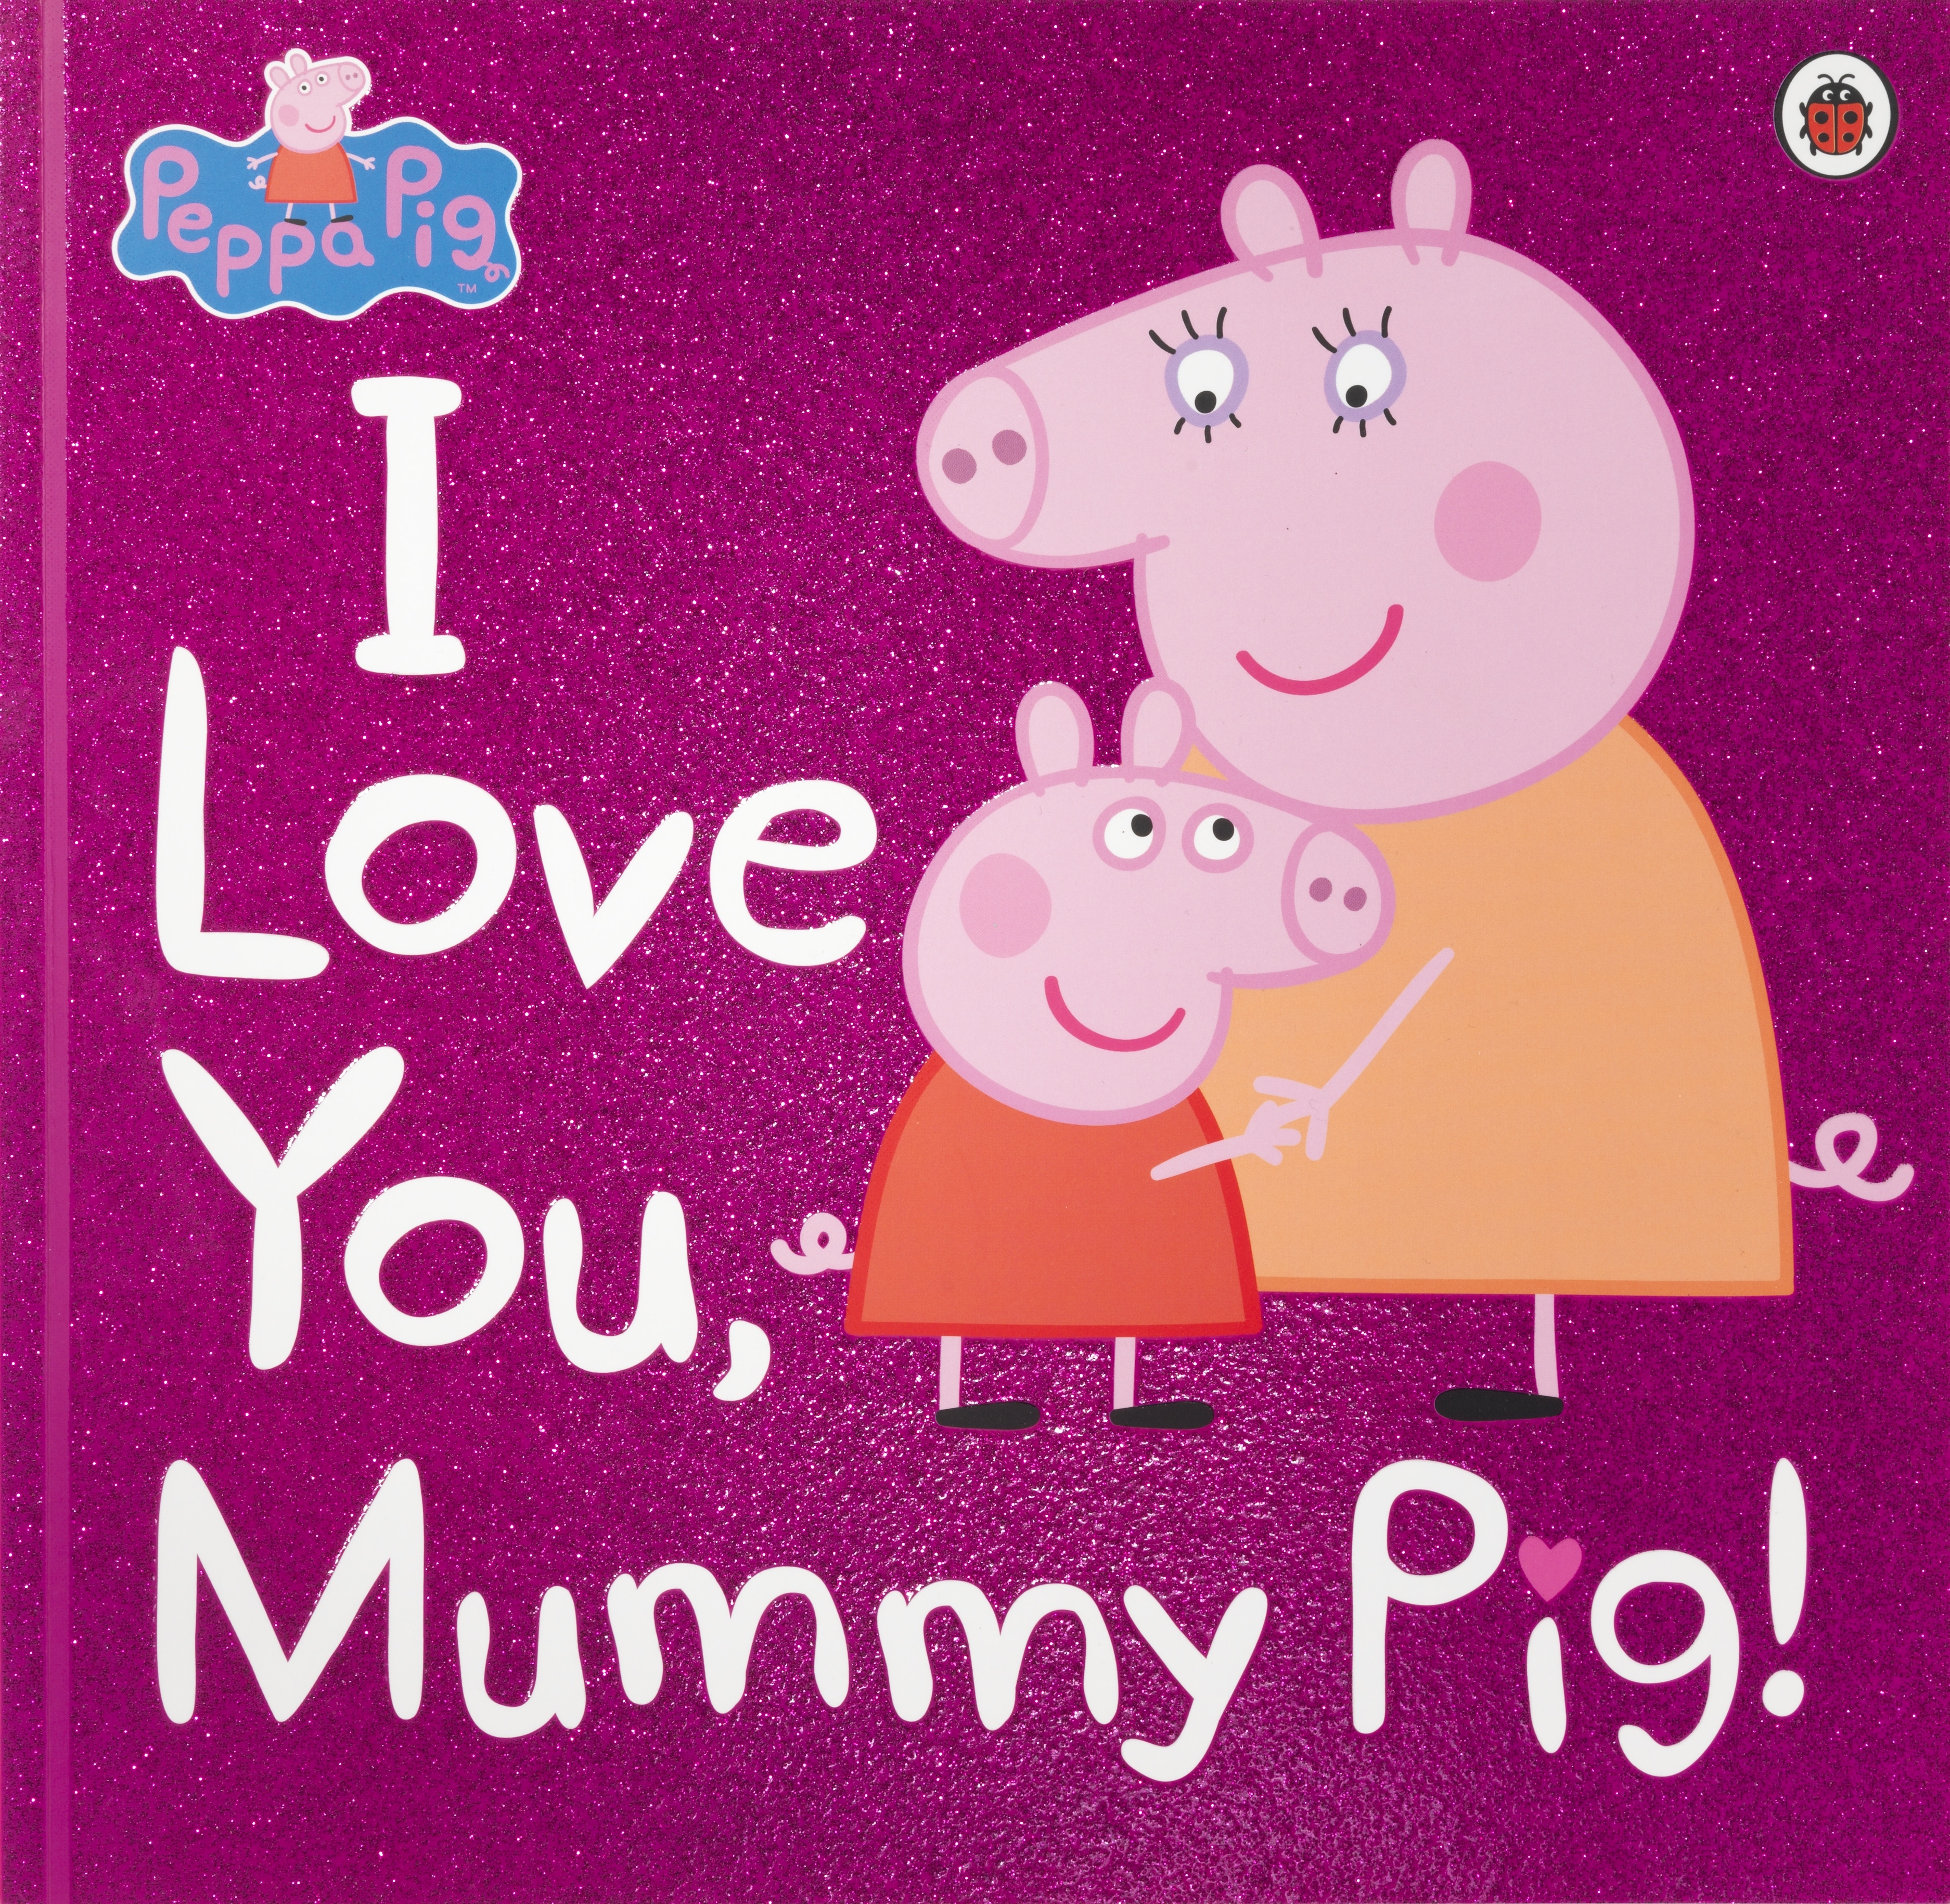 Book “Peppa Pig: I Love You, Mummy Pig” by Peppa Pig — February 8, 2018